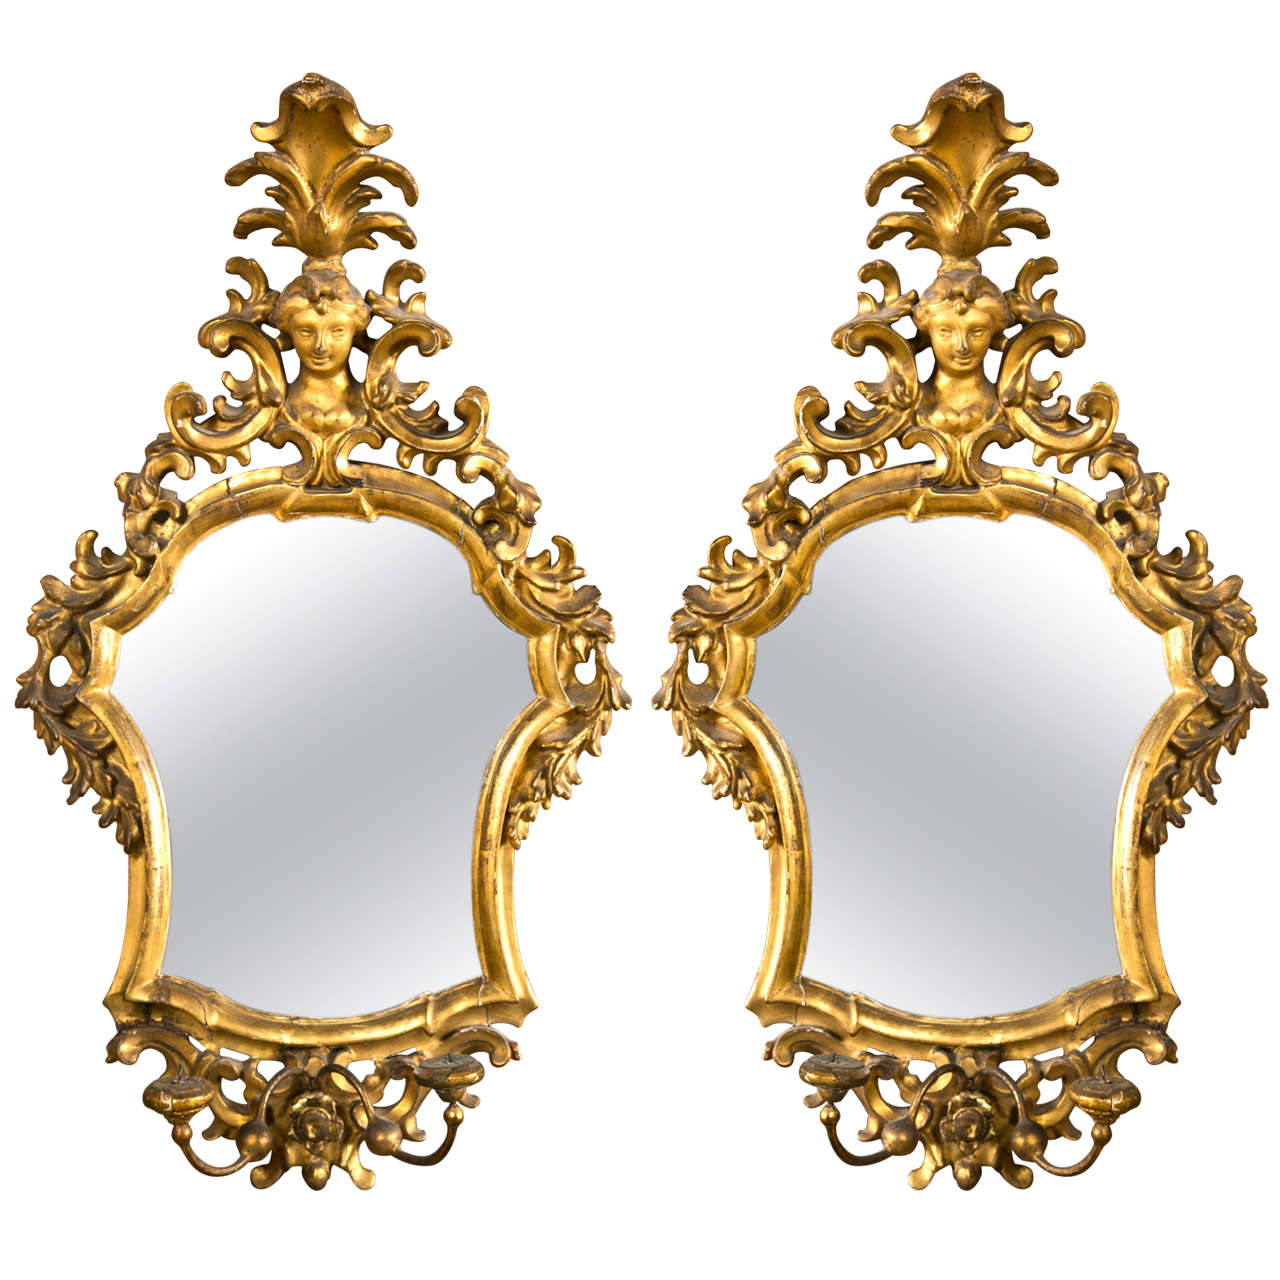 Pair of French Rococo Style Mirror Girandoles